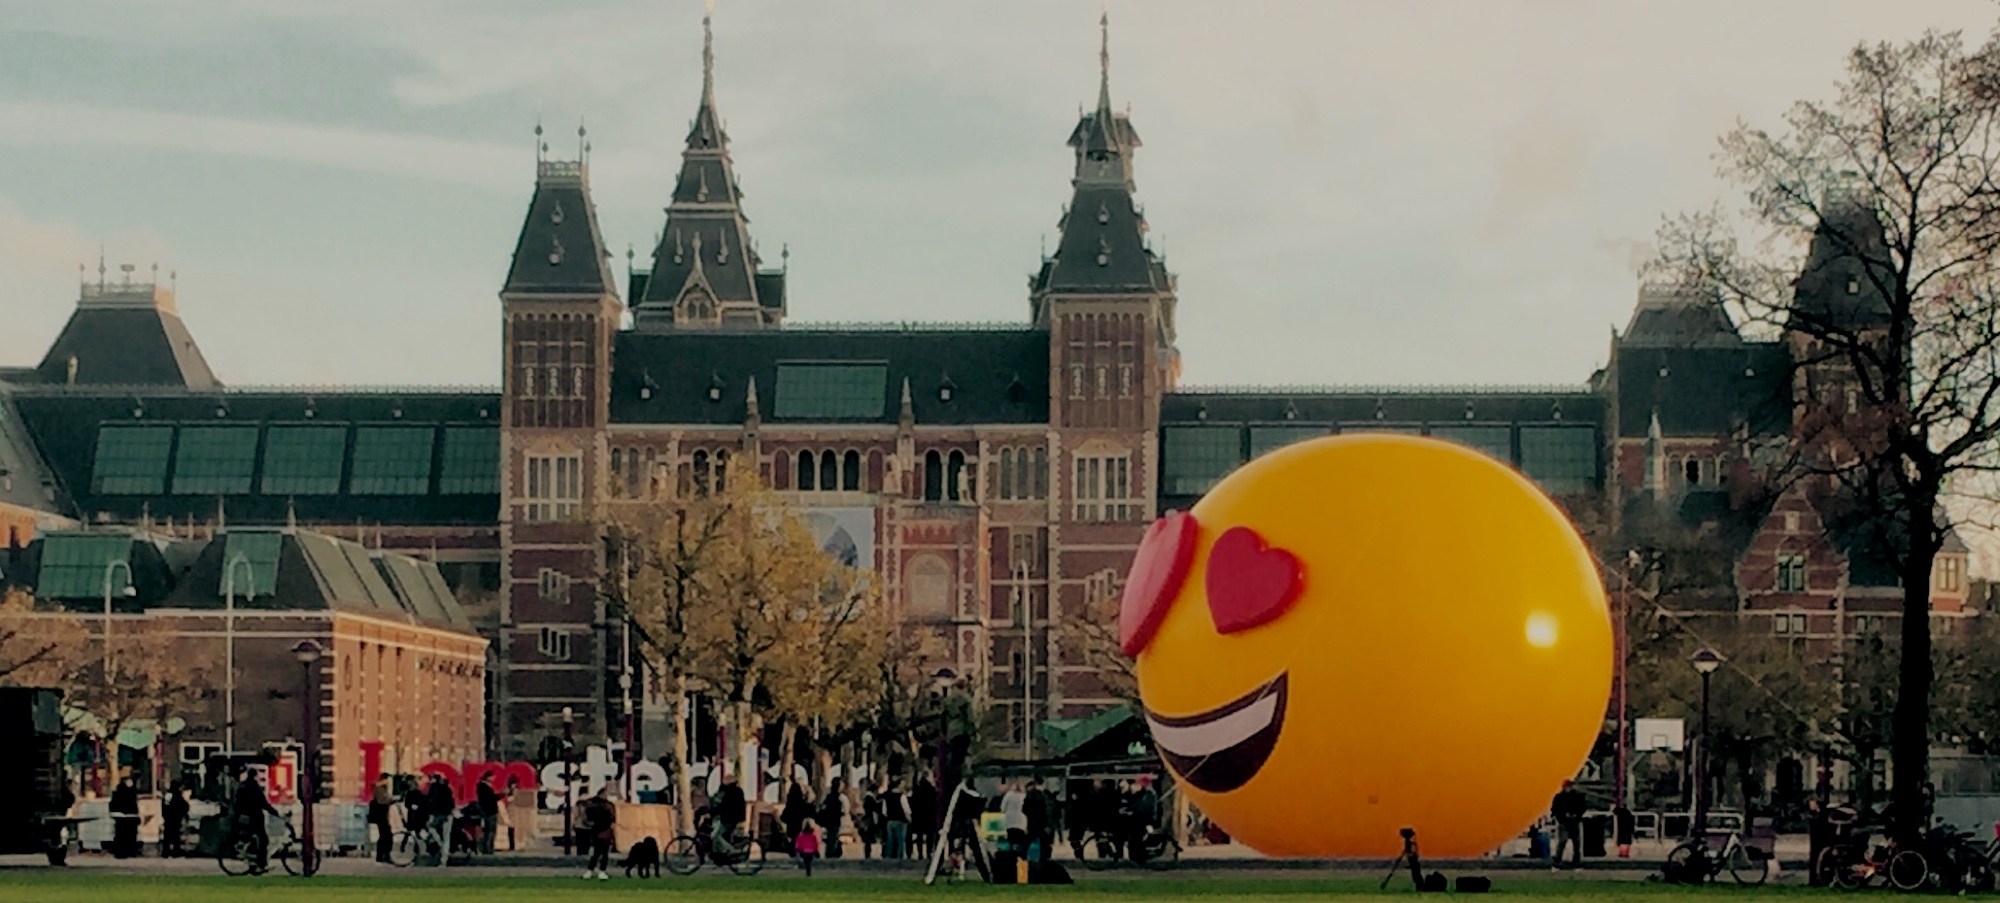 Opblaasbare emoji 10 meter Amsterdam Museum plein Tele2 activatie 4G - Publi air